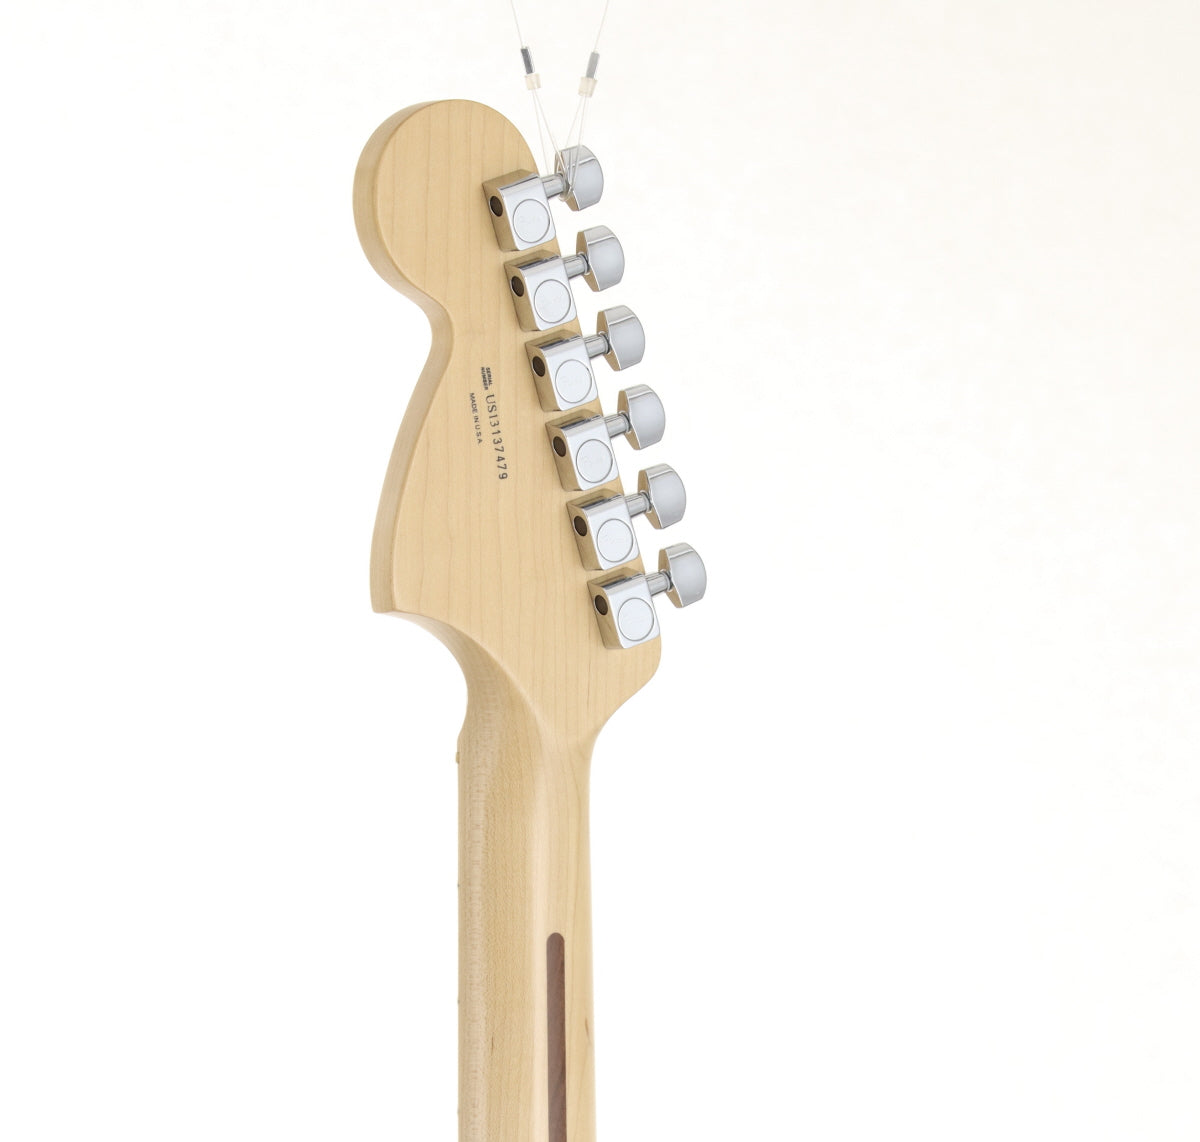 [SN US13137479] USED Fender / American Special Stratocaster 3-Color Sunburst [06]